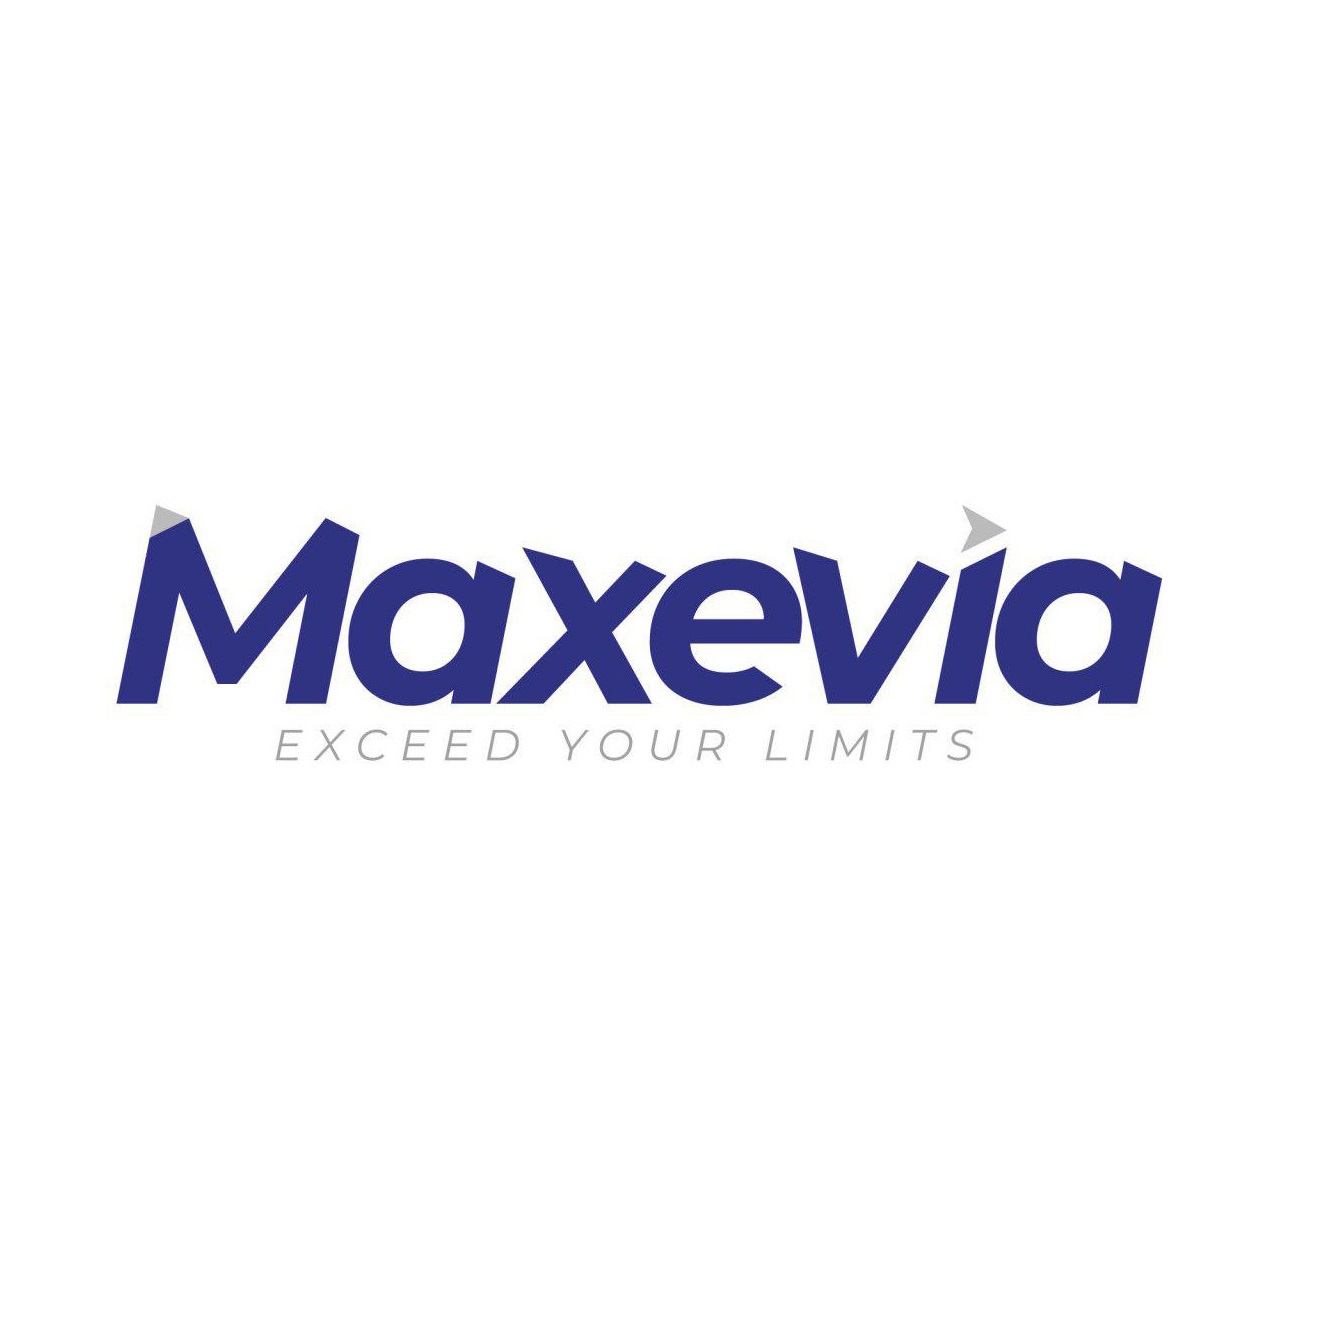 Maxevia corporate